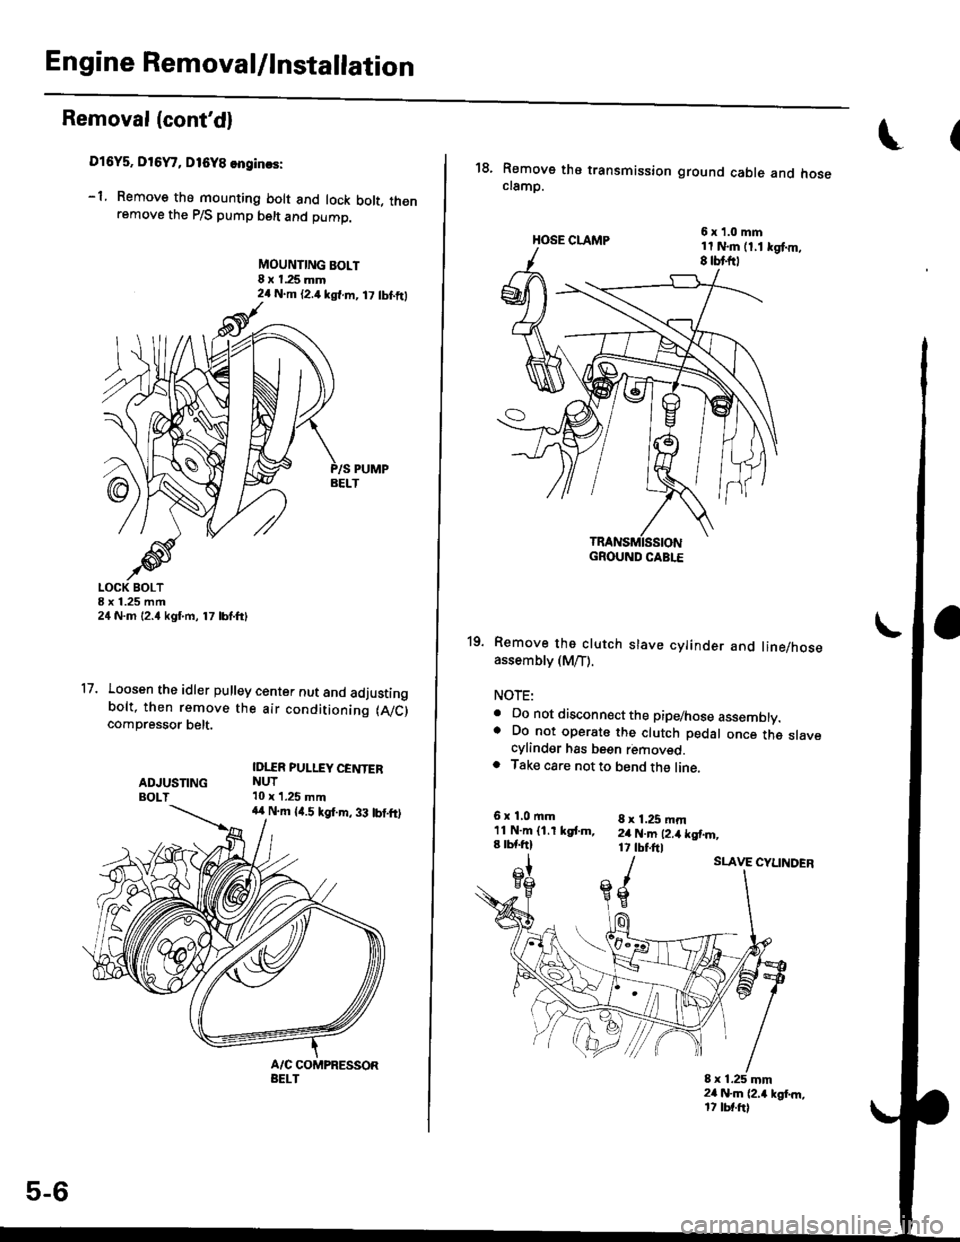 HONDA CIVIC 1996 6.G Workshop Manual Engine Removal/lnstailation
Removal (contdl
Dl6Y5. DrGYr, D16Y8 enginas:
-1. Remove the mounting bolt and lock bolt, thenremove the P/S pump belt and pump.
MOUNTING BOLT8 x 1.25 mm24 N.m {2.4 kgl.m, 